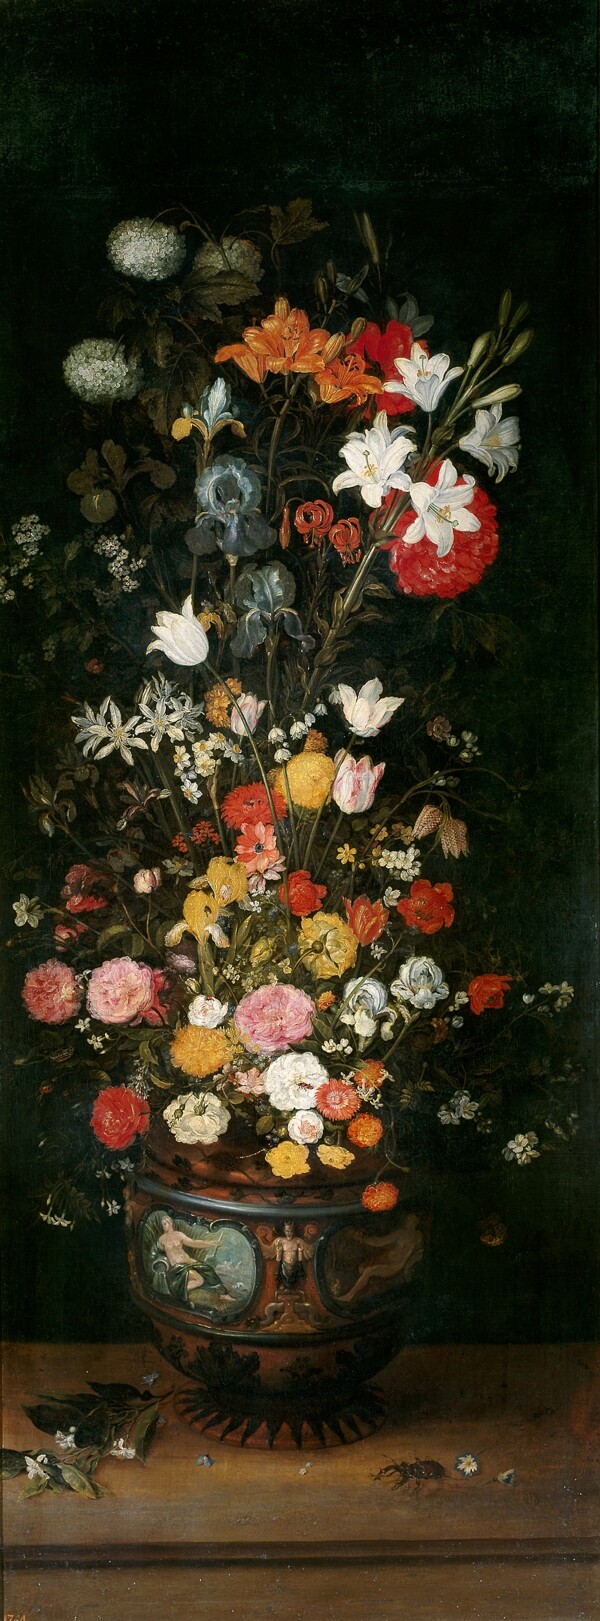 BruegheltheElderJanFloreroFirstquarterof17Century花卉水果蔬菜器皿静物印象画派写实主义油画装饰画